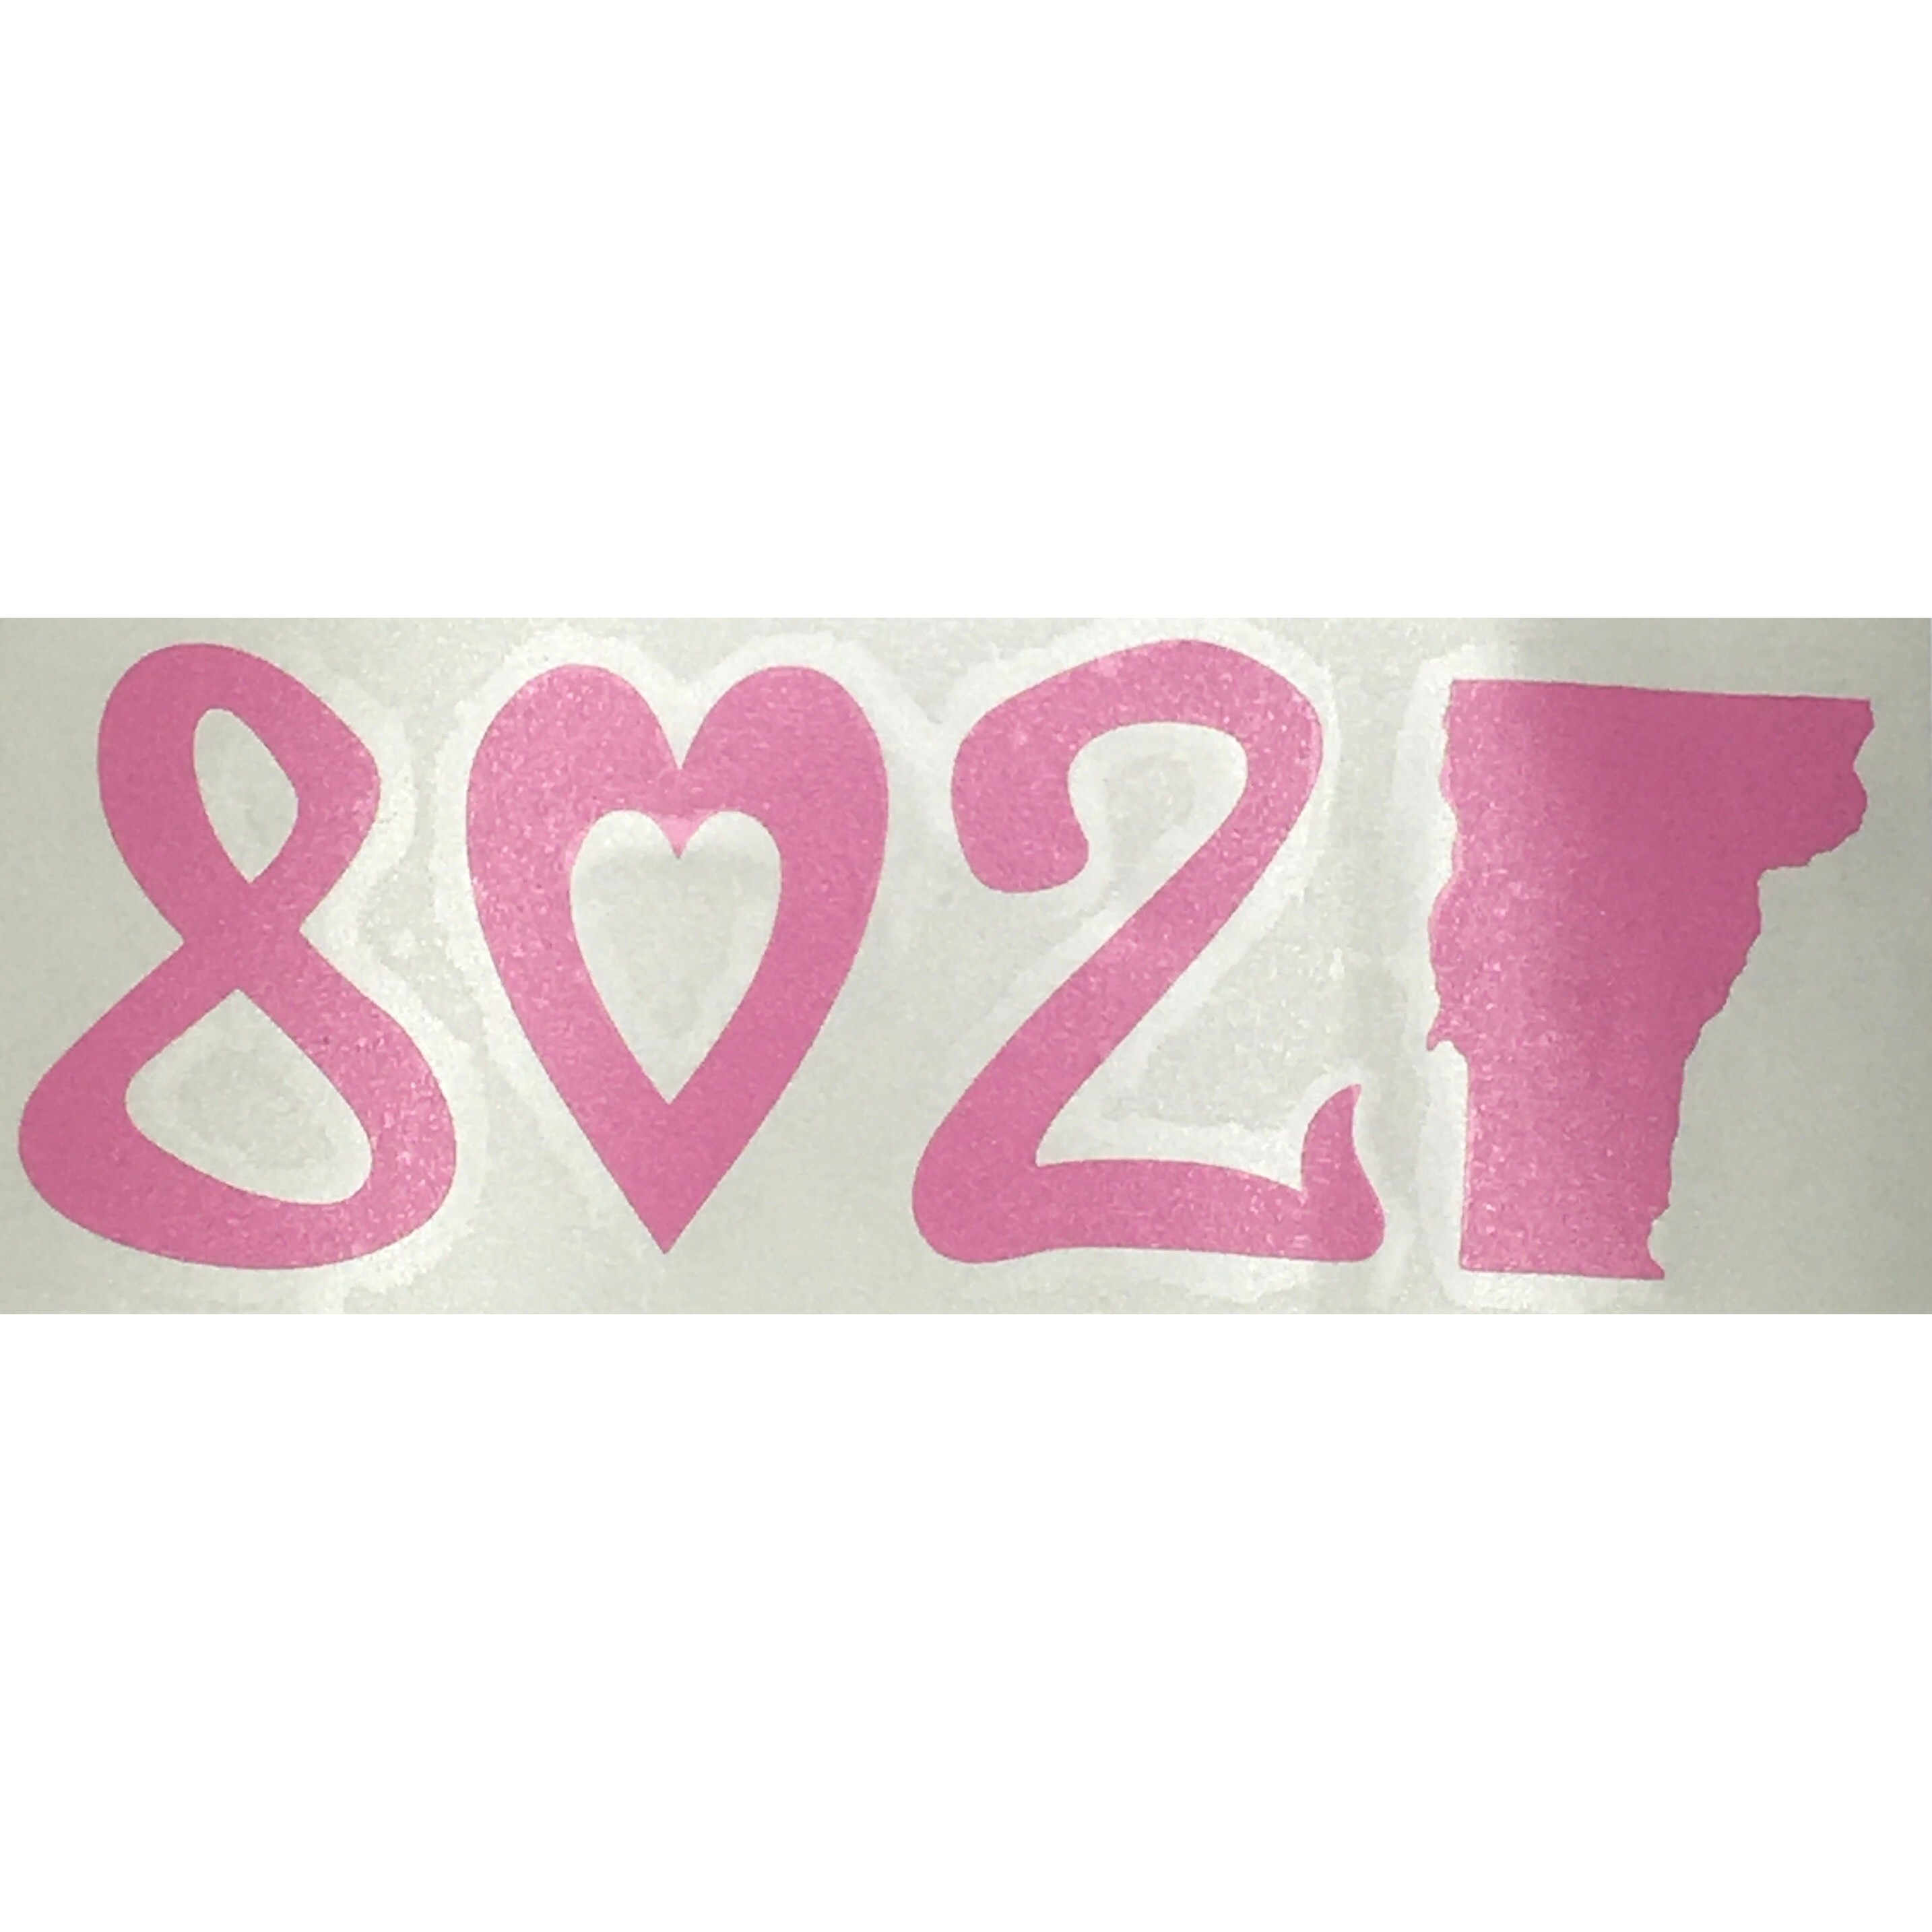 802 Classic Heart Sticker (Pink)